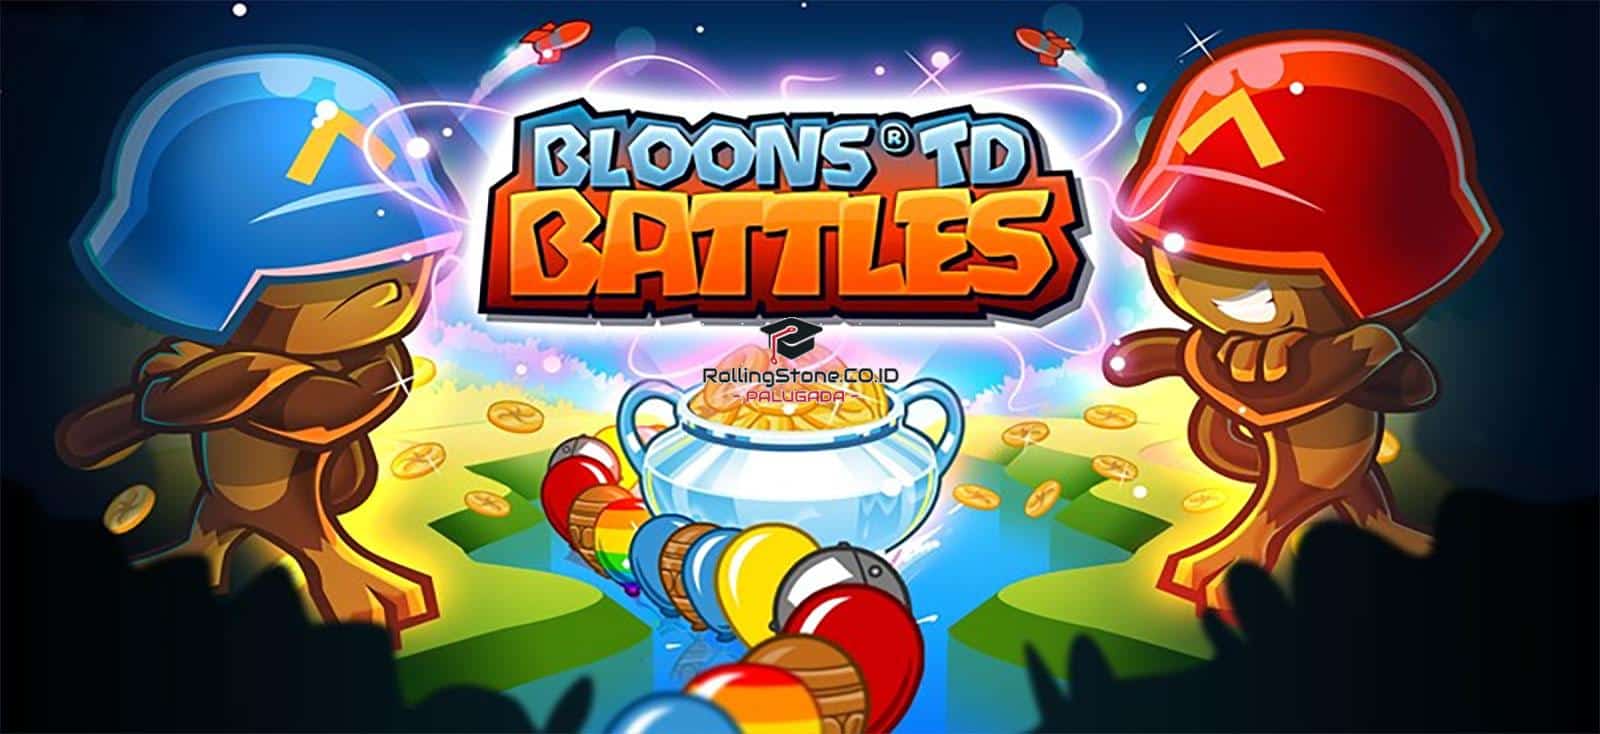 bloons td battles 2 free download